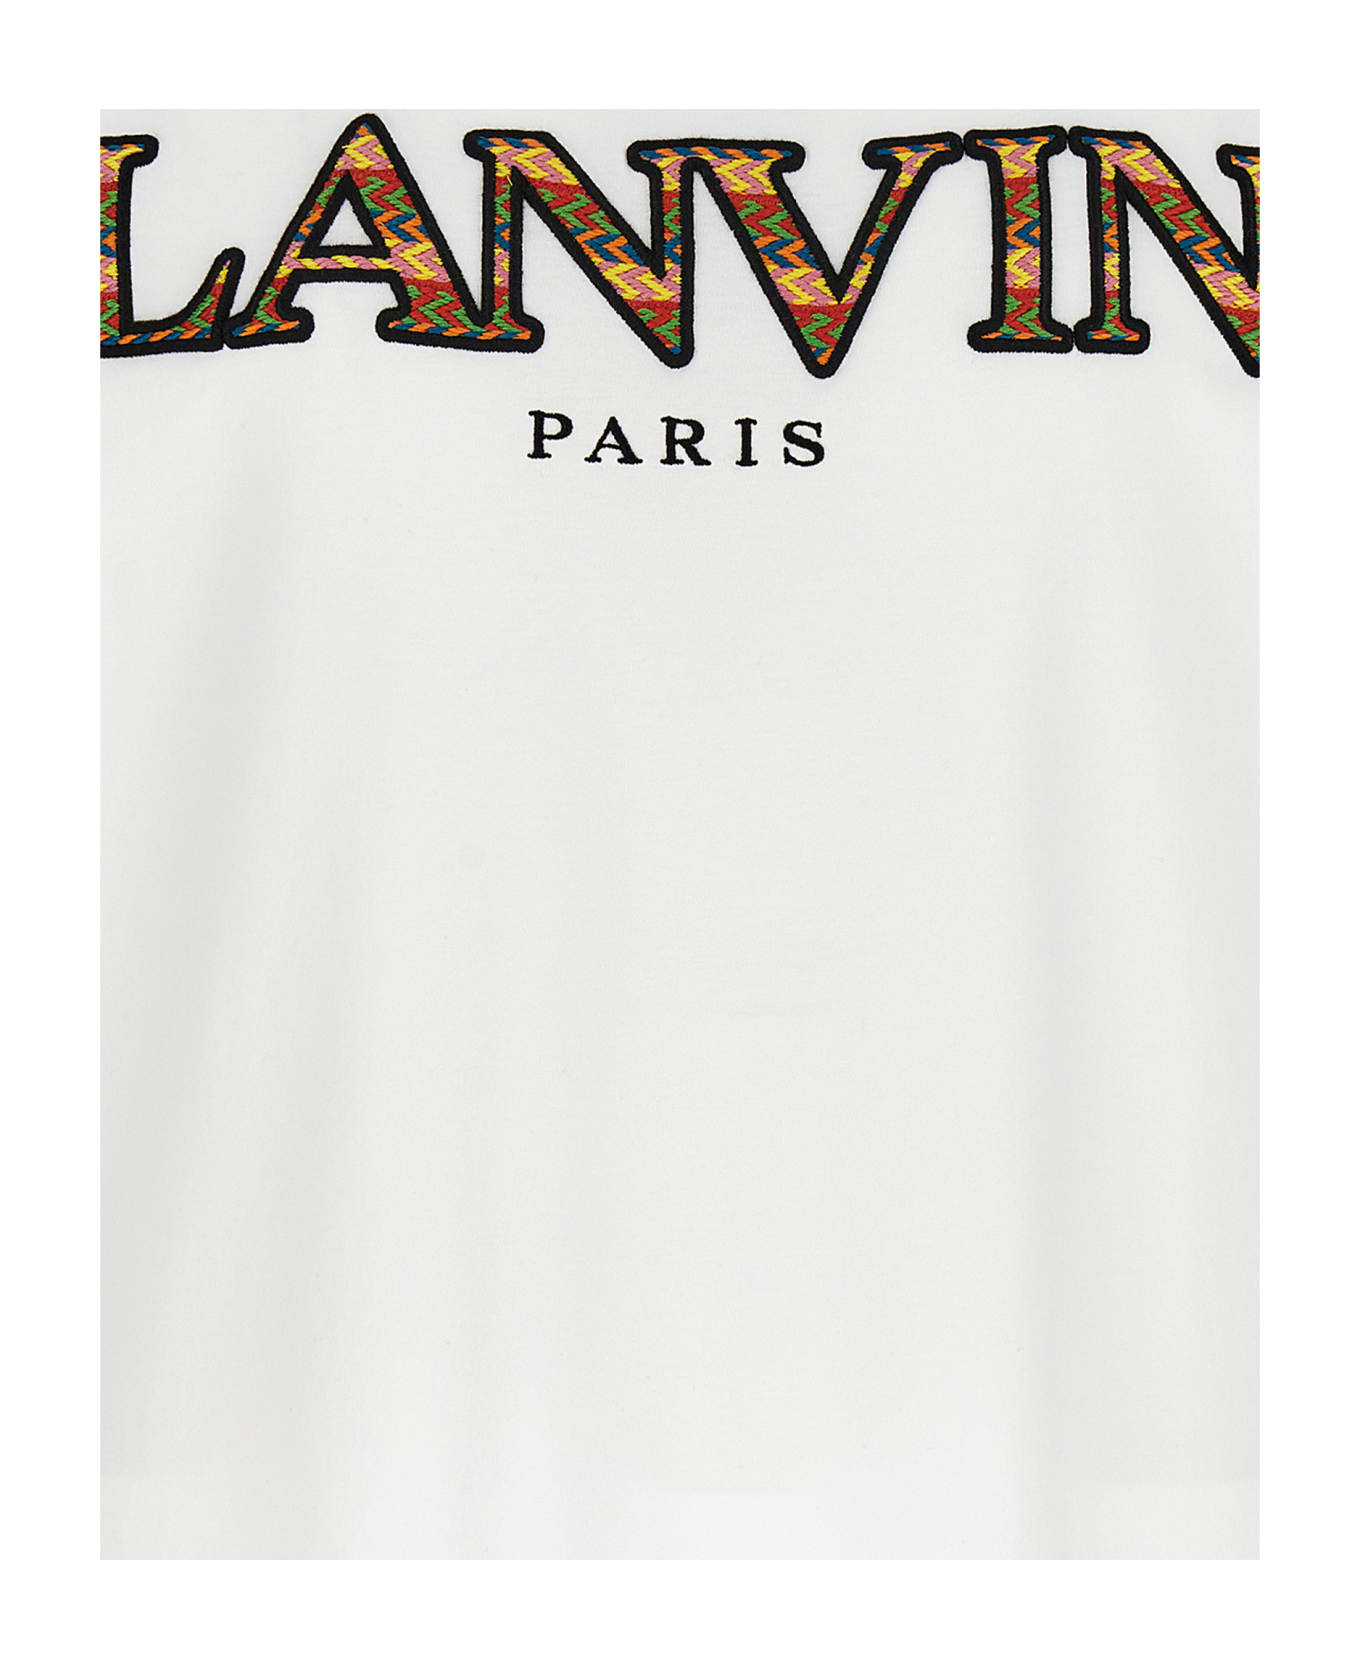 Lanvin Classic Curb T-shirt - Optic White